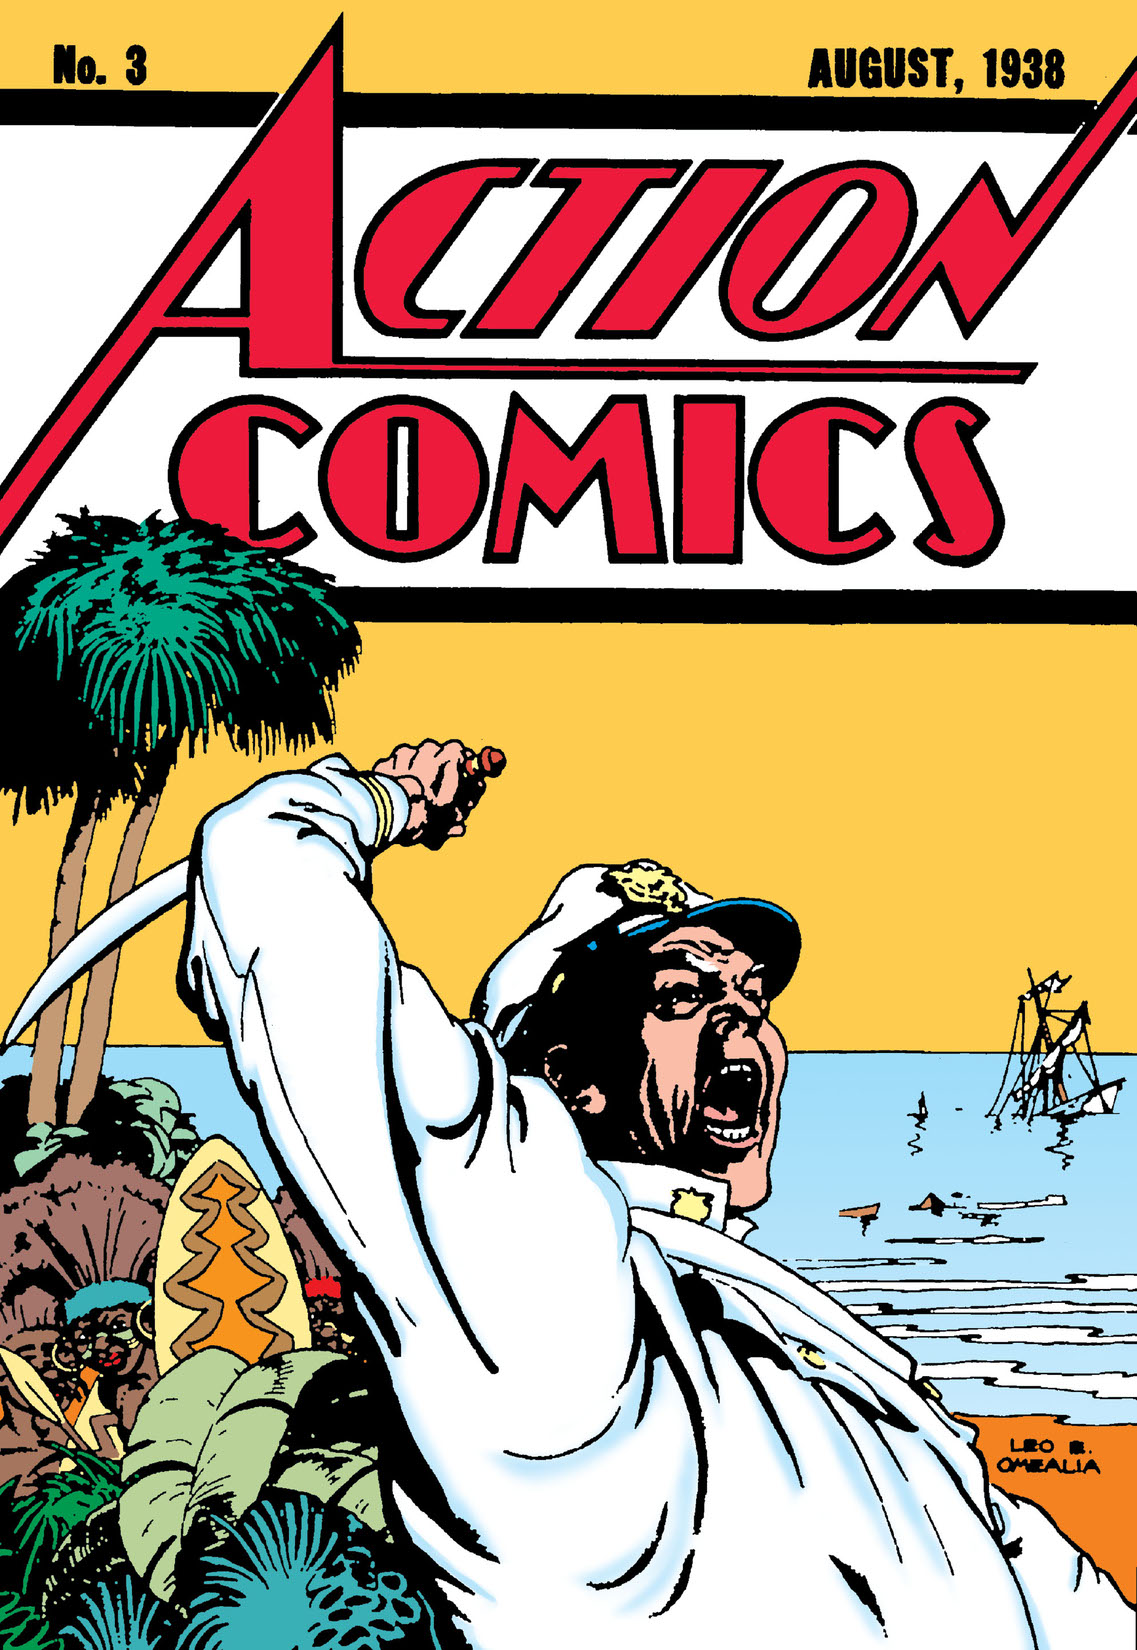 Action Comics (1938-) #3 preview images